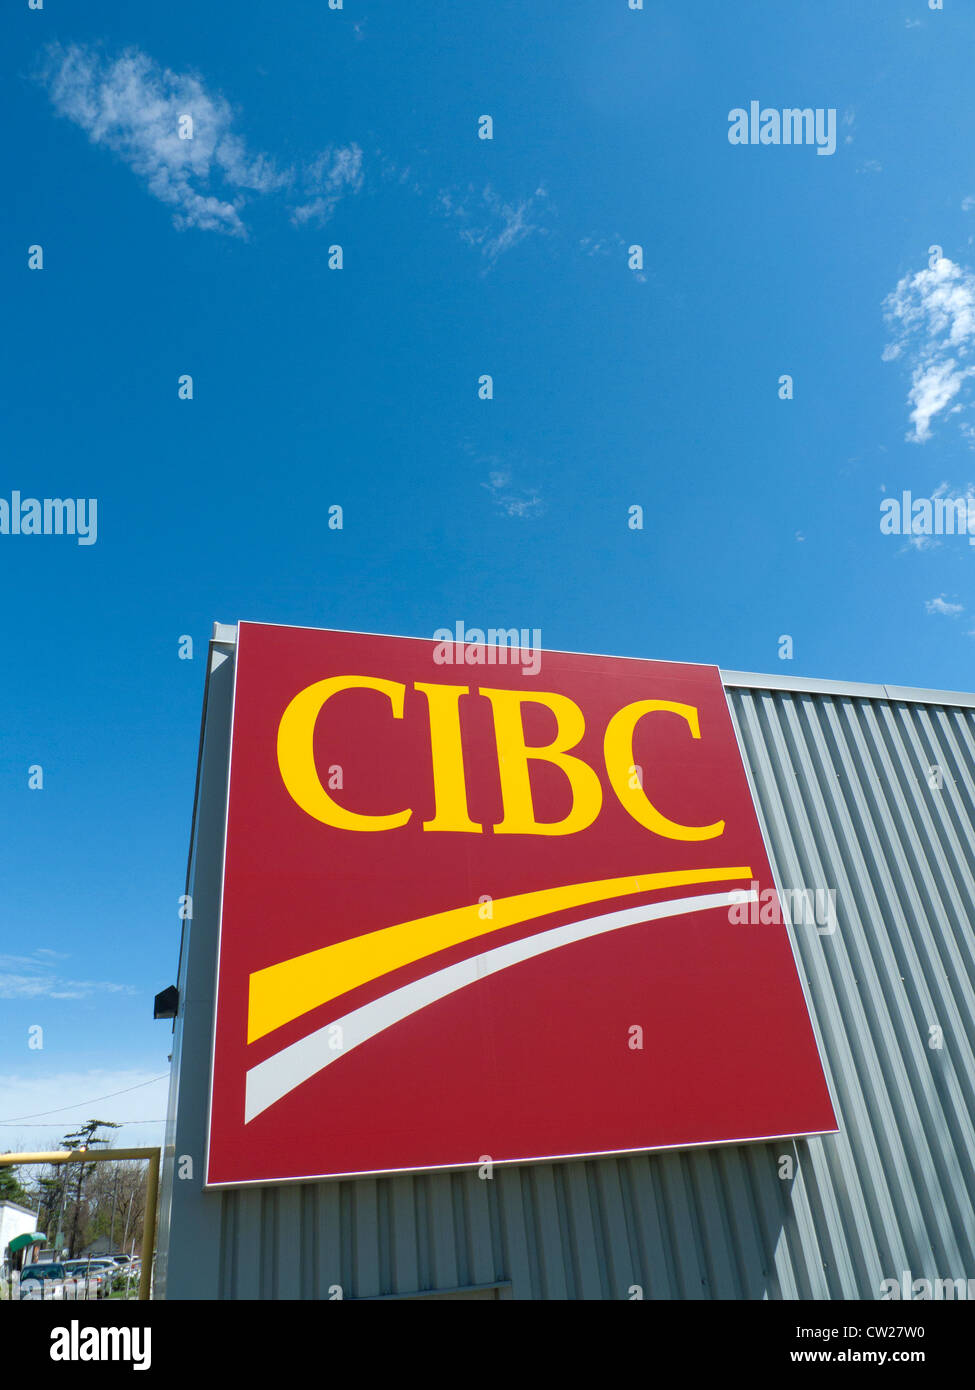 The exterior of CIBC bank Fort Erie Ontario Canada Stock Photo